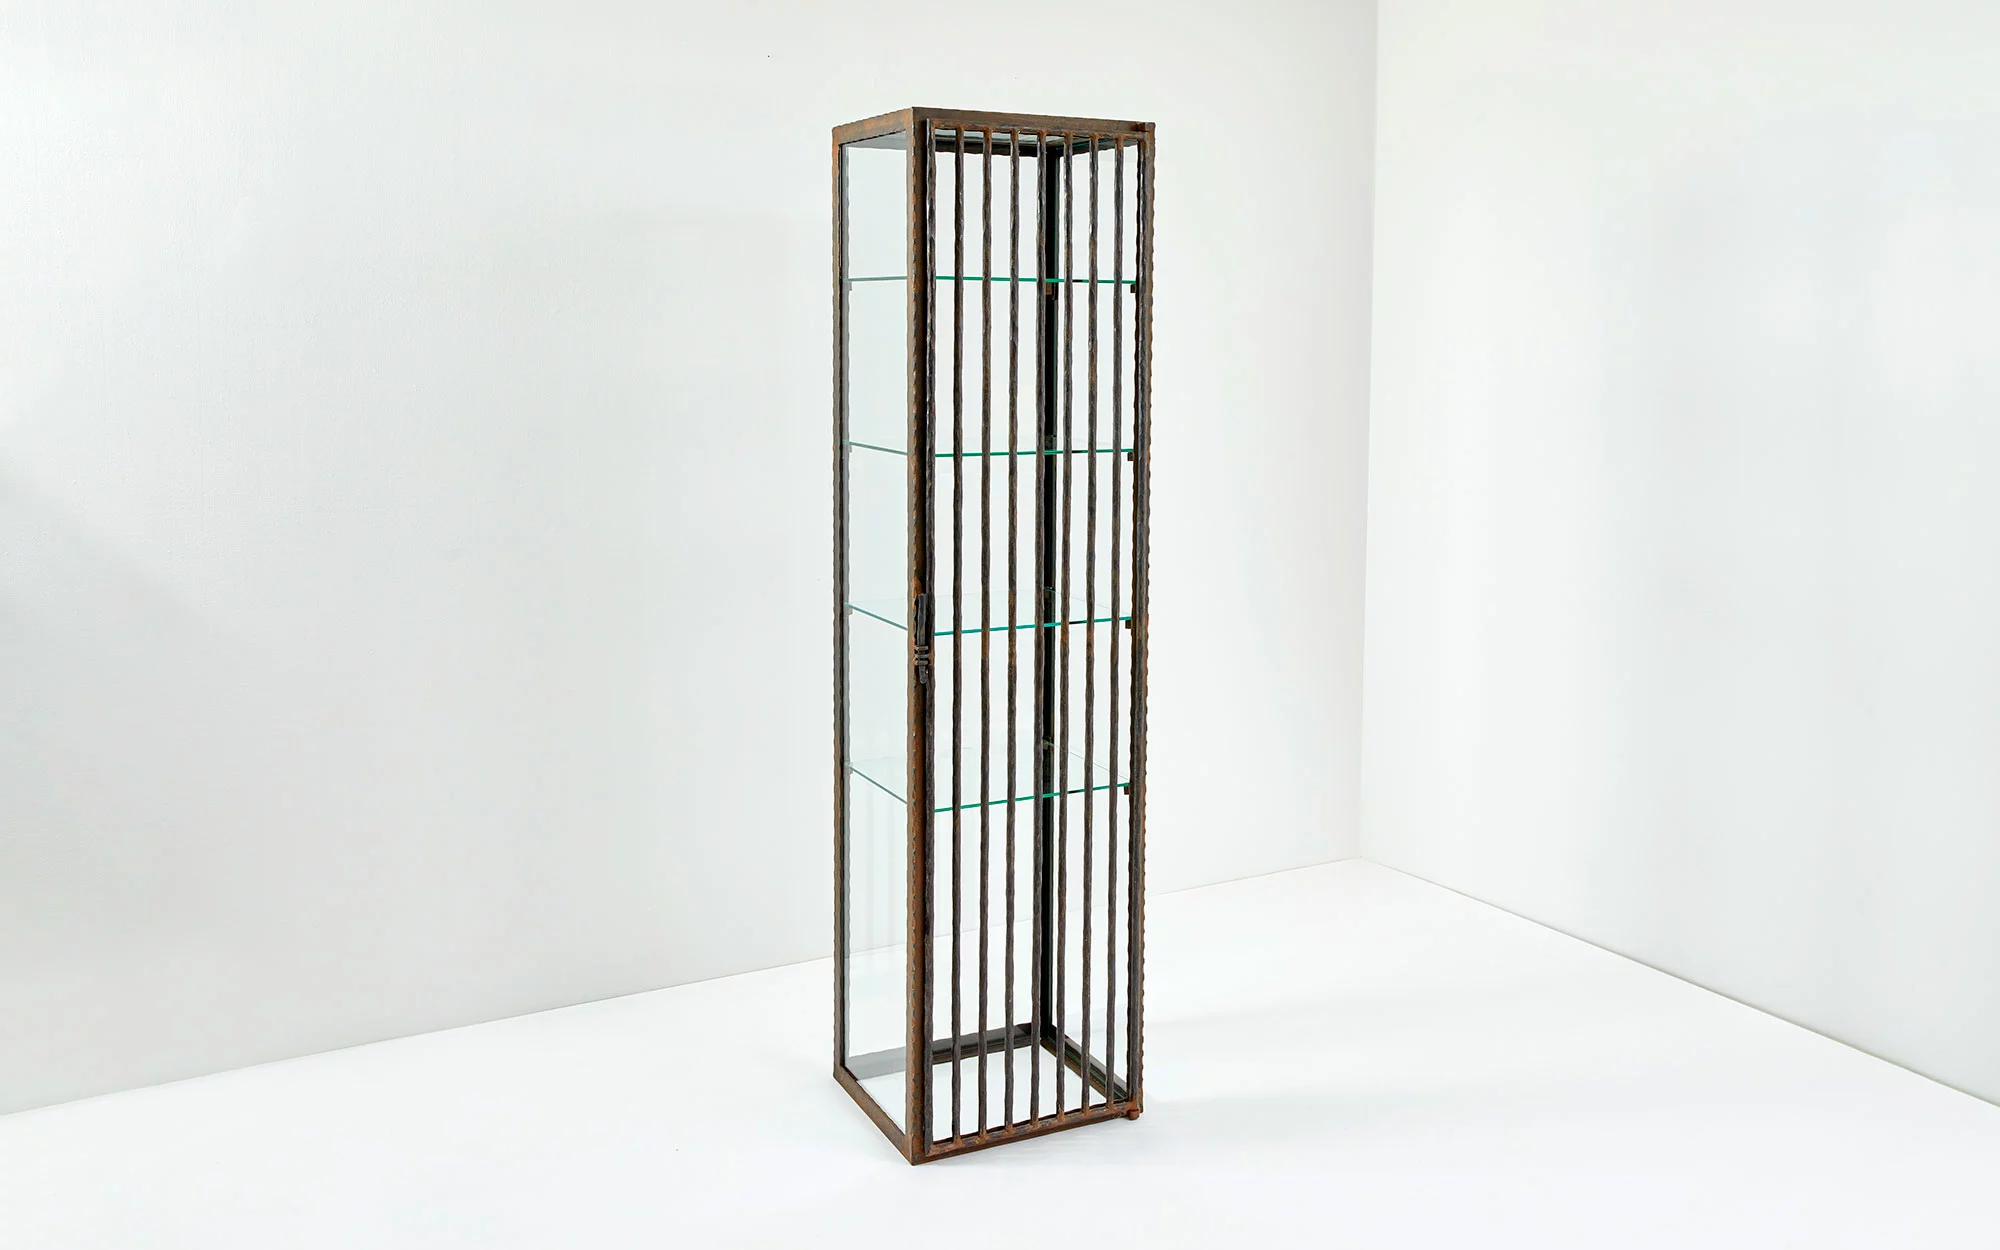 Cage haute - Elisabeth Garouste & Mattia Bonetti - Table light - Galerie kreo